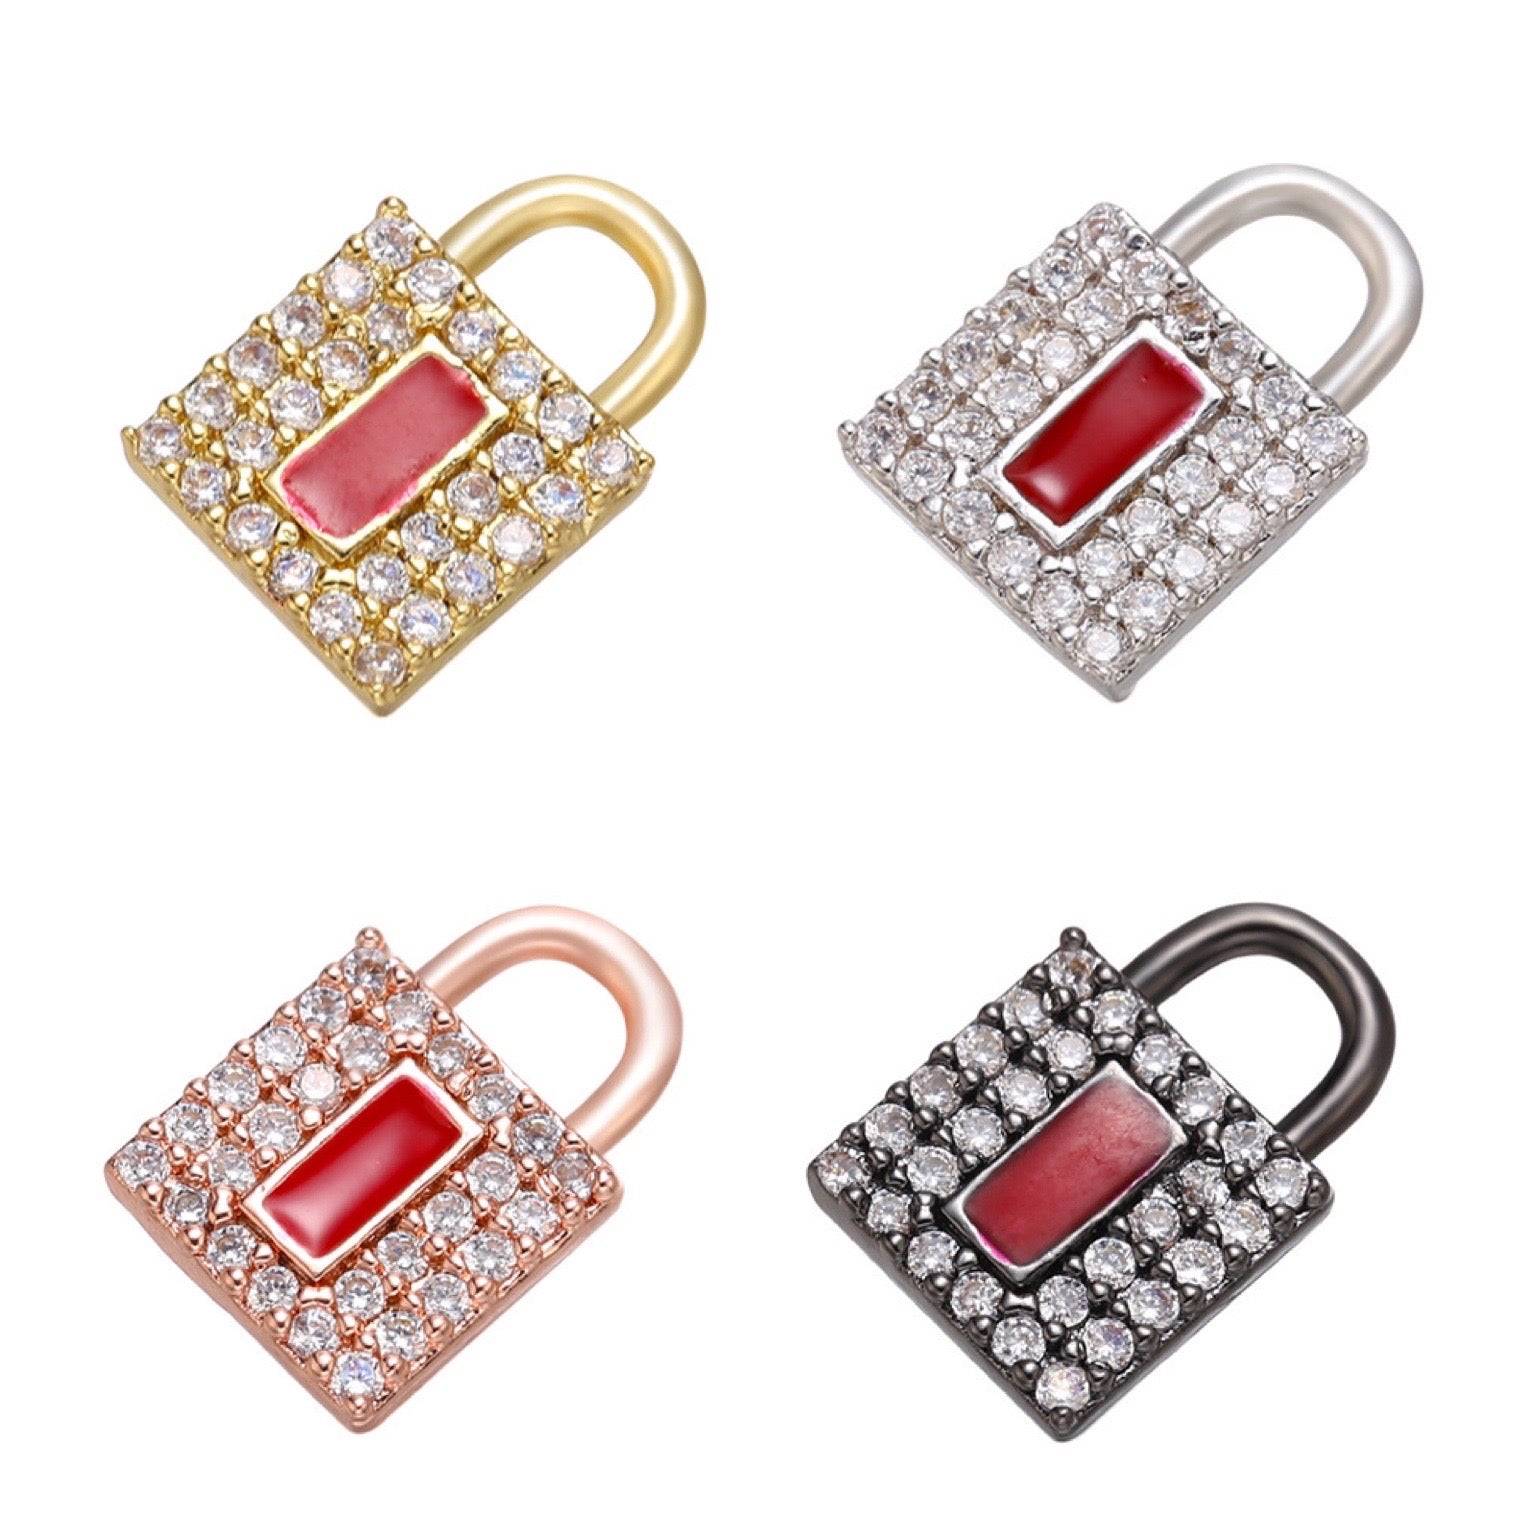 10pcs/lot 12*8mm CZ Paved Lock Charms Mix Red CZ Paved Charms Keys & Locks Small Sizes Charms Beads Beyond